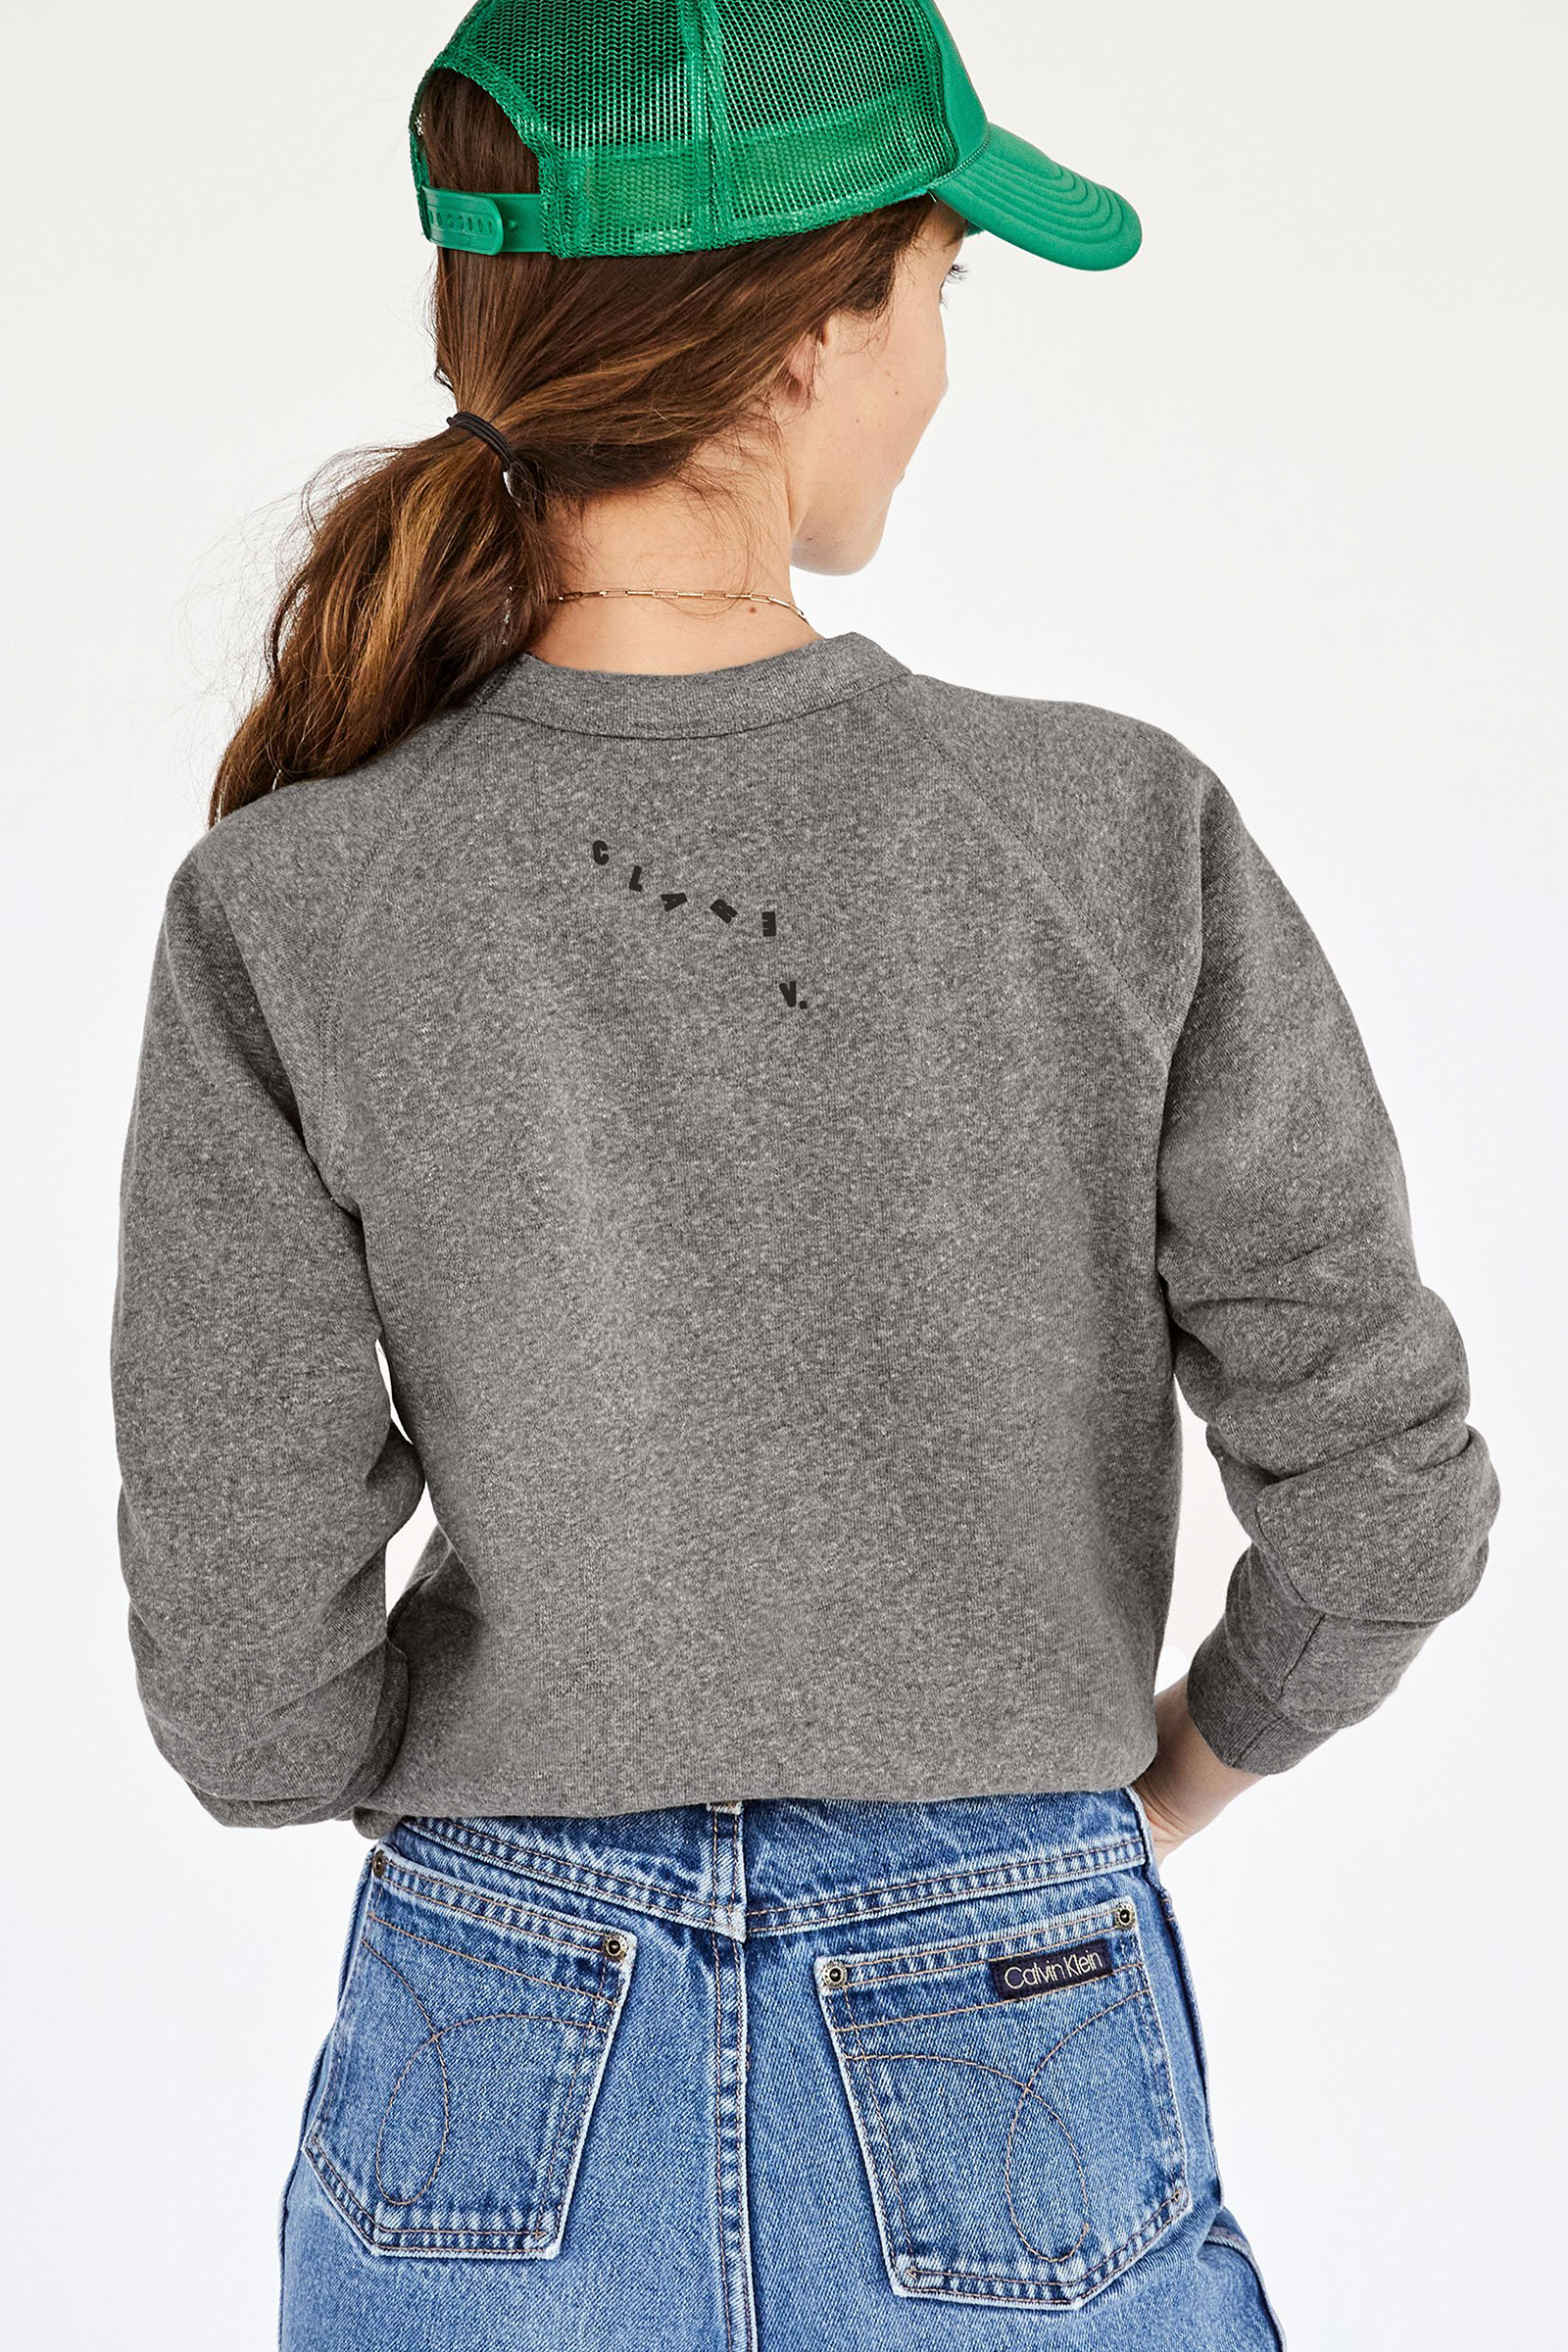 Clare Vivier Masculin & Feminin Sweatshirt in Grey